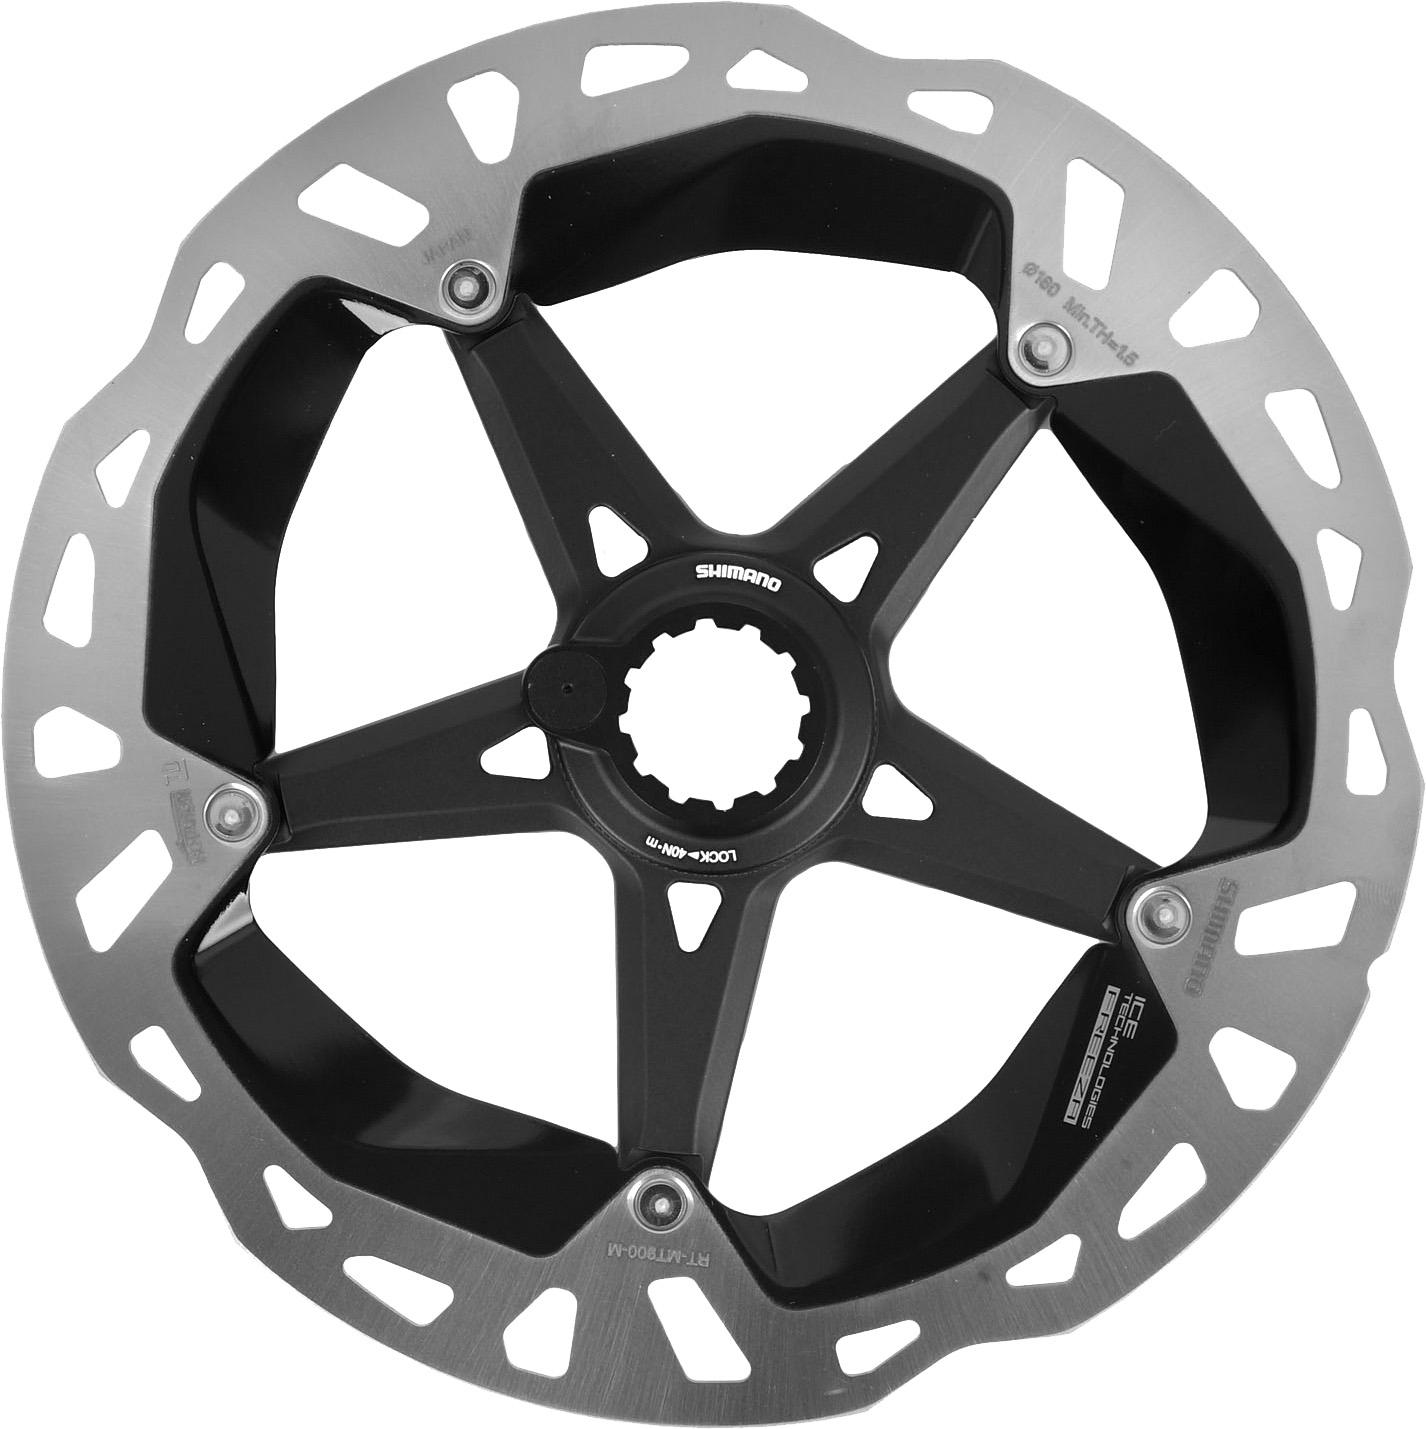 Shimano XTR MT900 180mm CenterLock Internal disc brake rotor